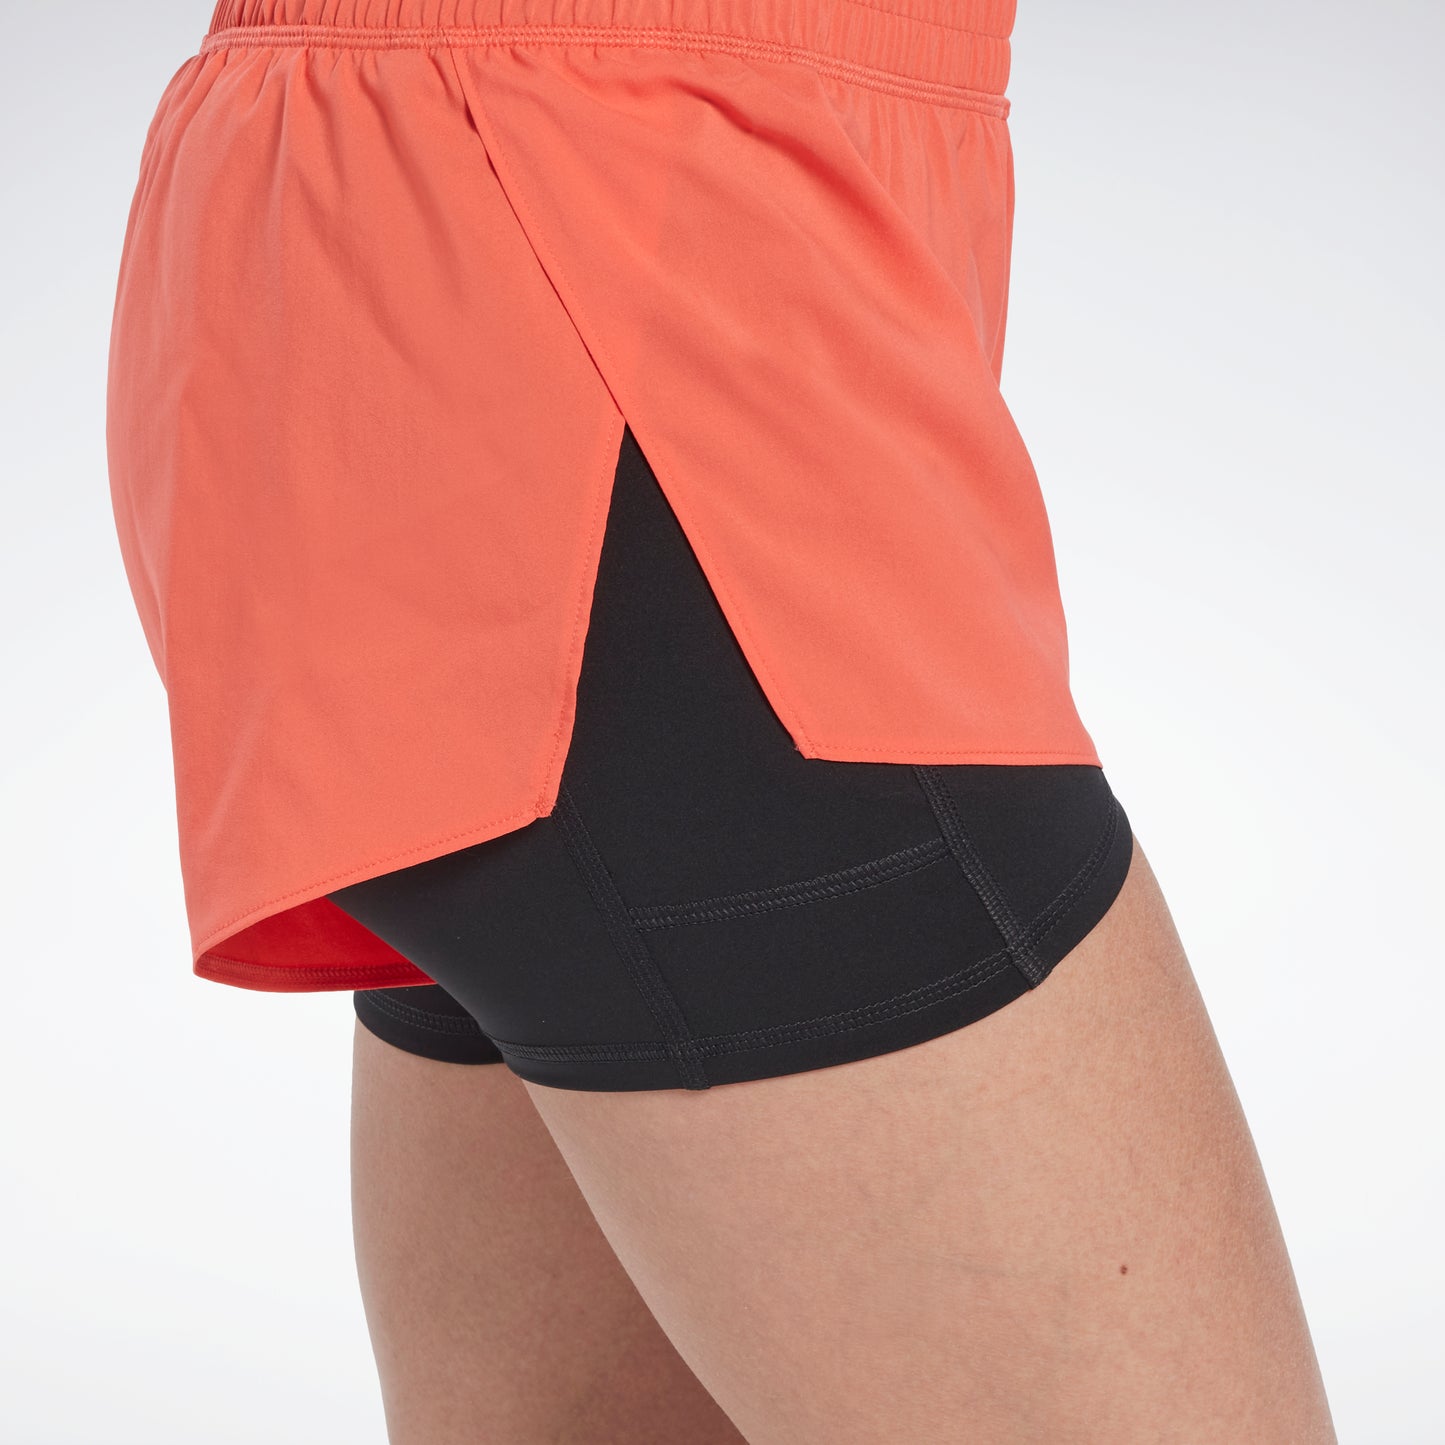 Buy Fllik Set of 2 Running Shorts Tights Under Dress Pants 8 Inch Length  Shorts for Women (Skin Color) M2 at